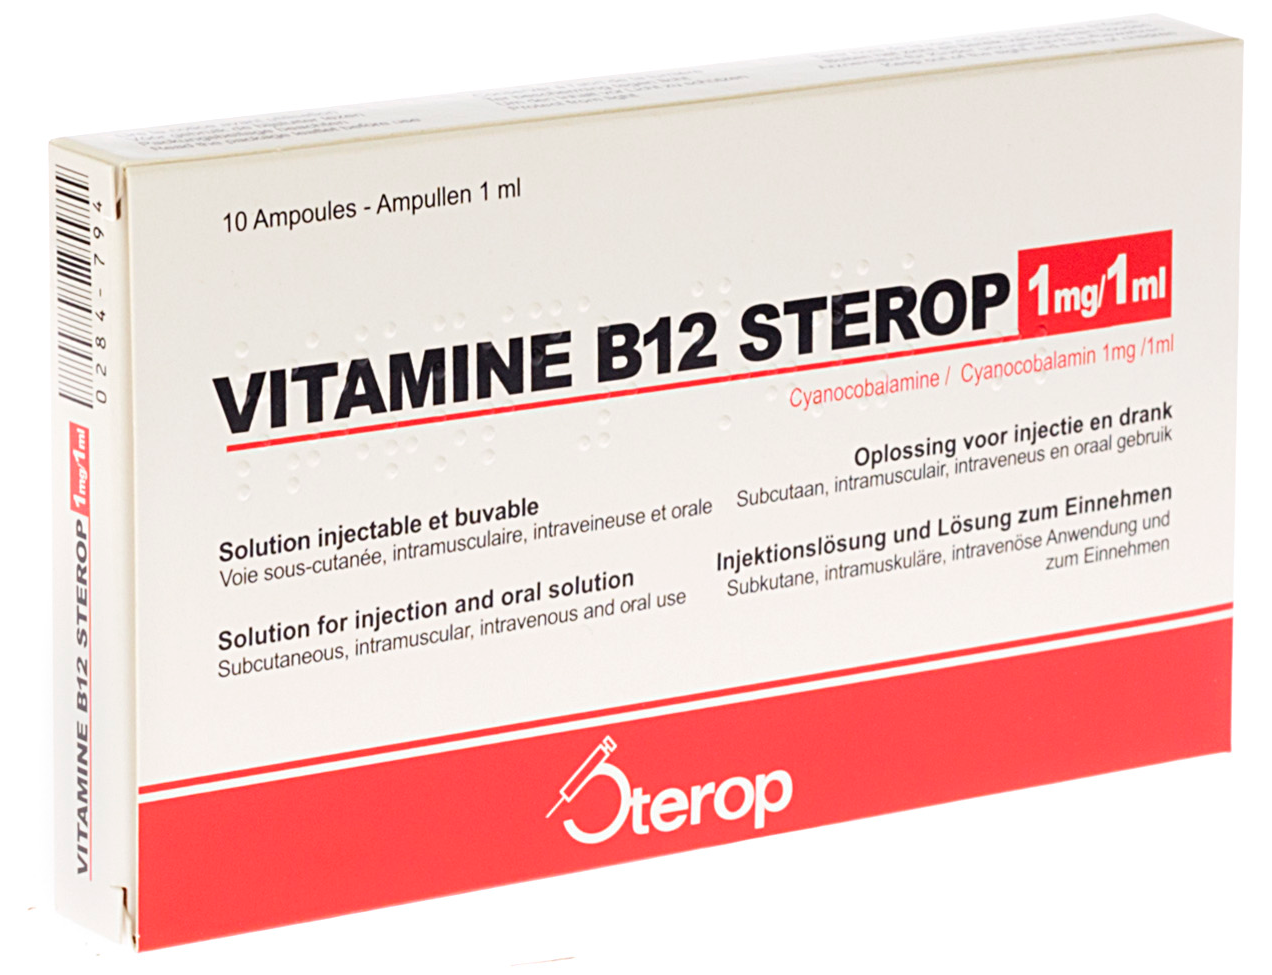 Noodlottig Wild Of Sterop Vitamine B12 1 mg/1 ml 10 ampullen - online bestellen | Optiphar